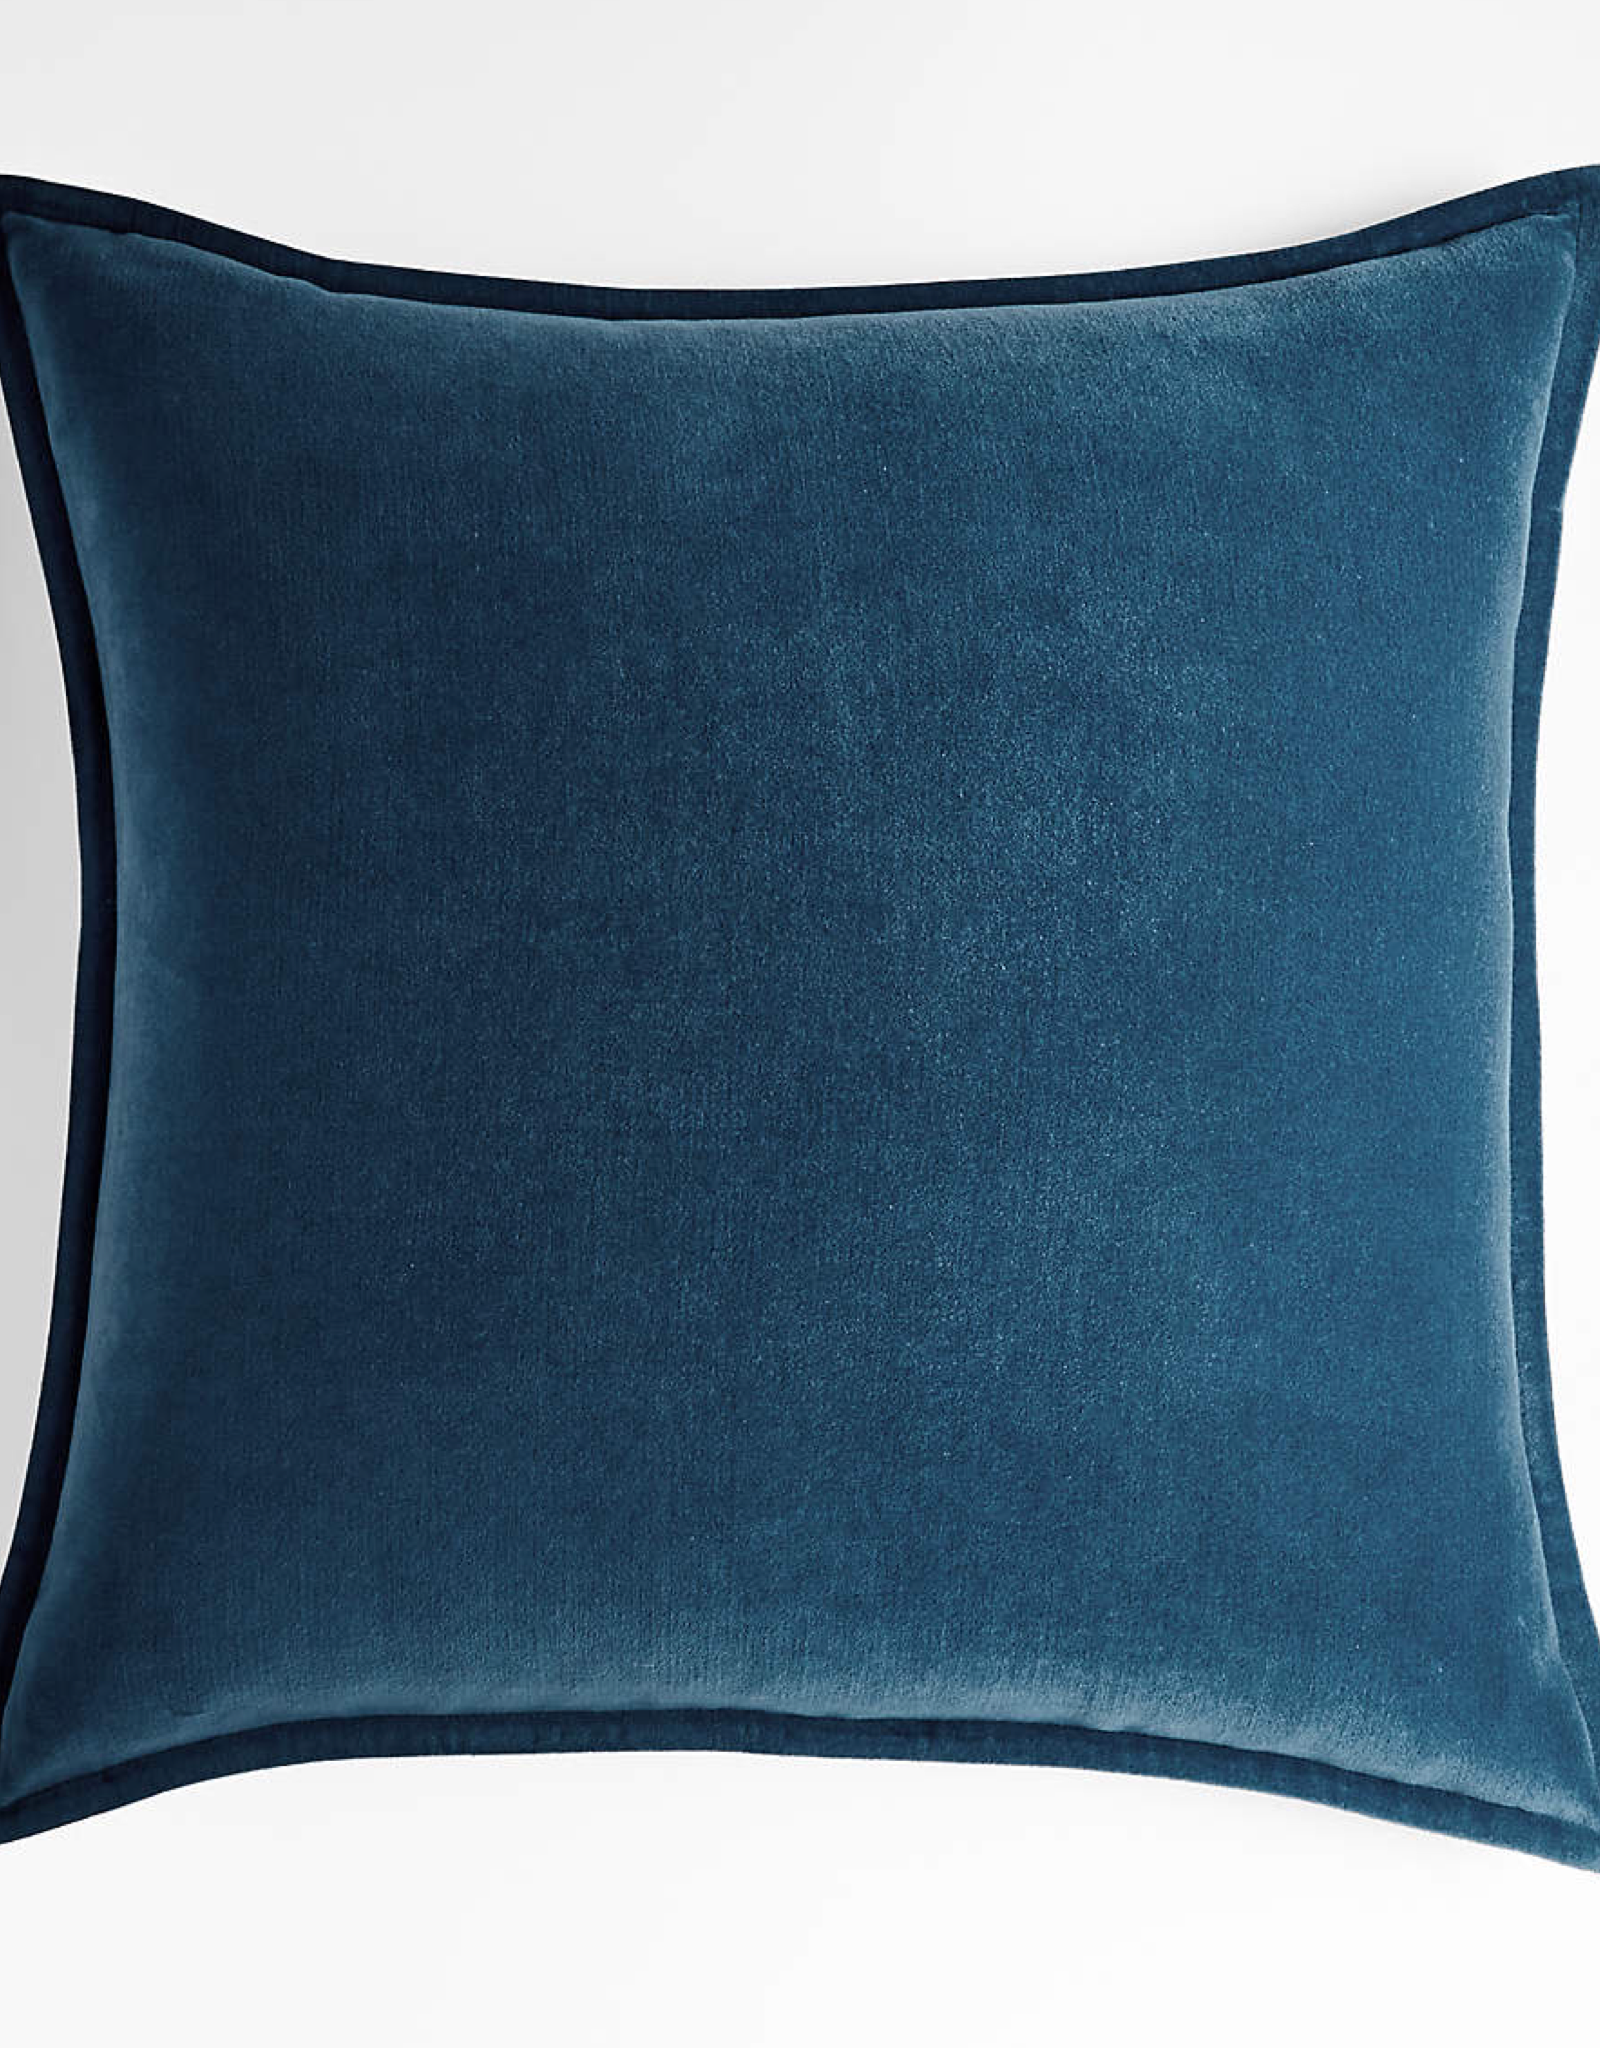 Daniadown Cushions Daniadown Dutch Velvet Persian Blue Toss 18 x 18